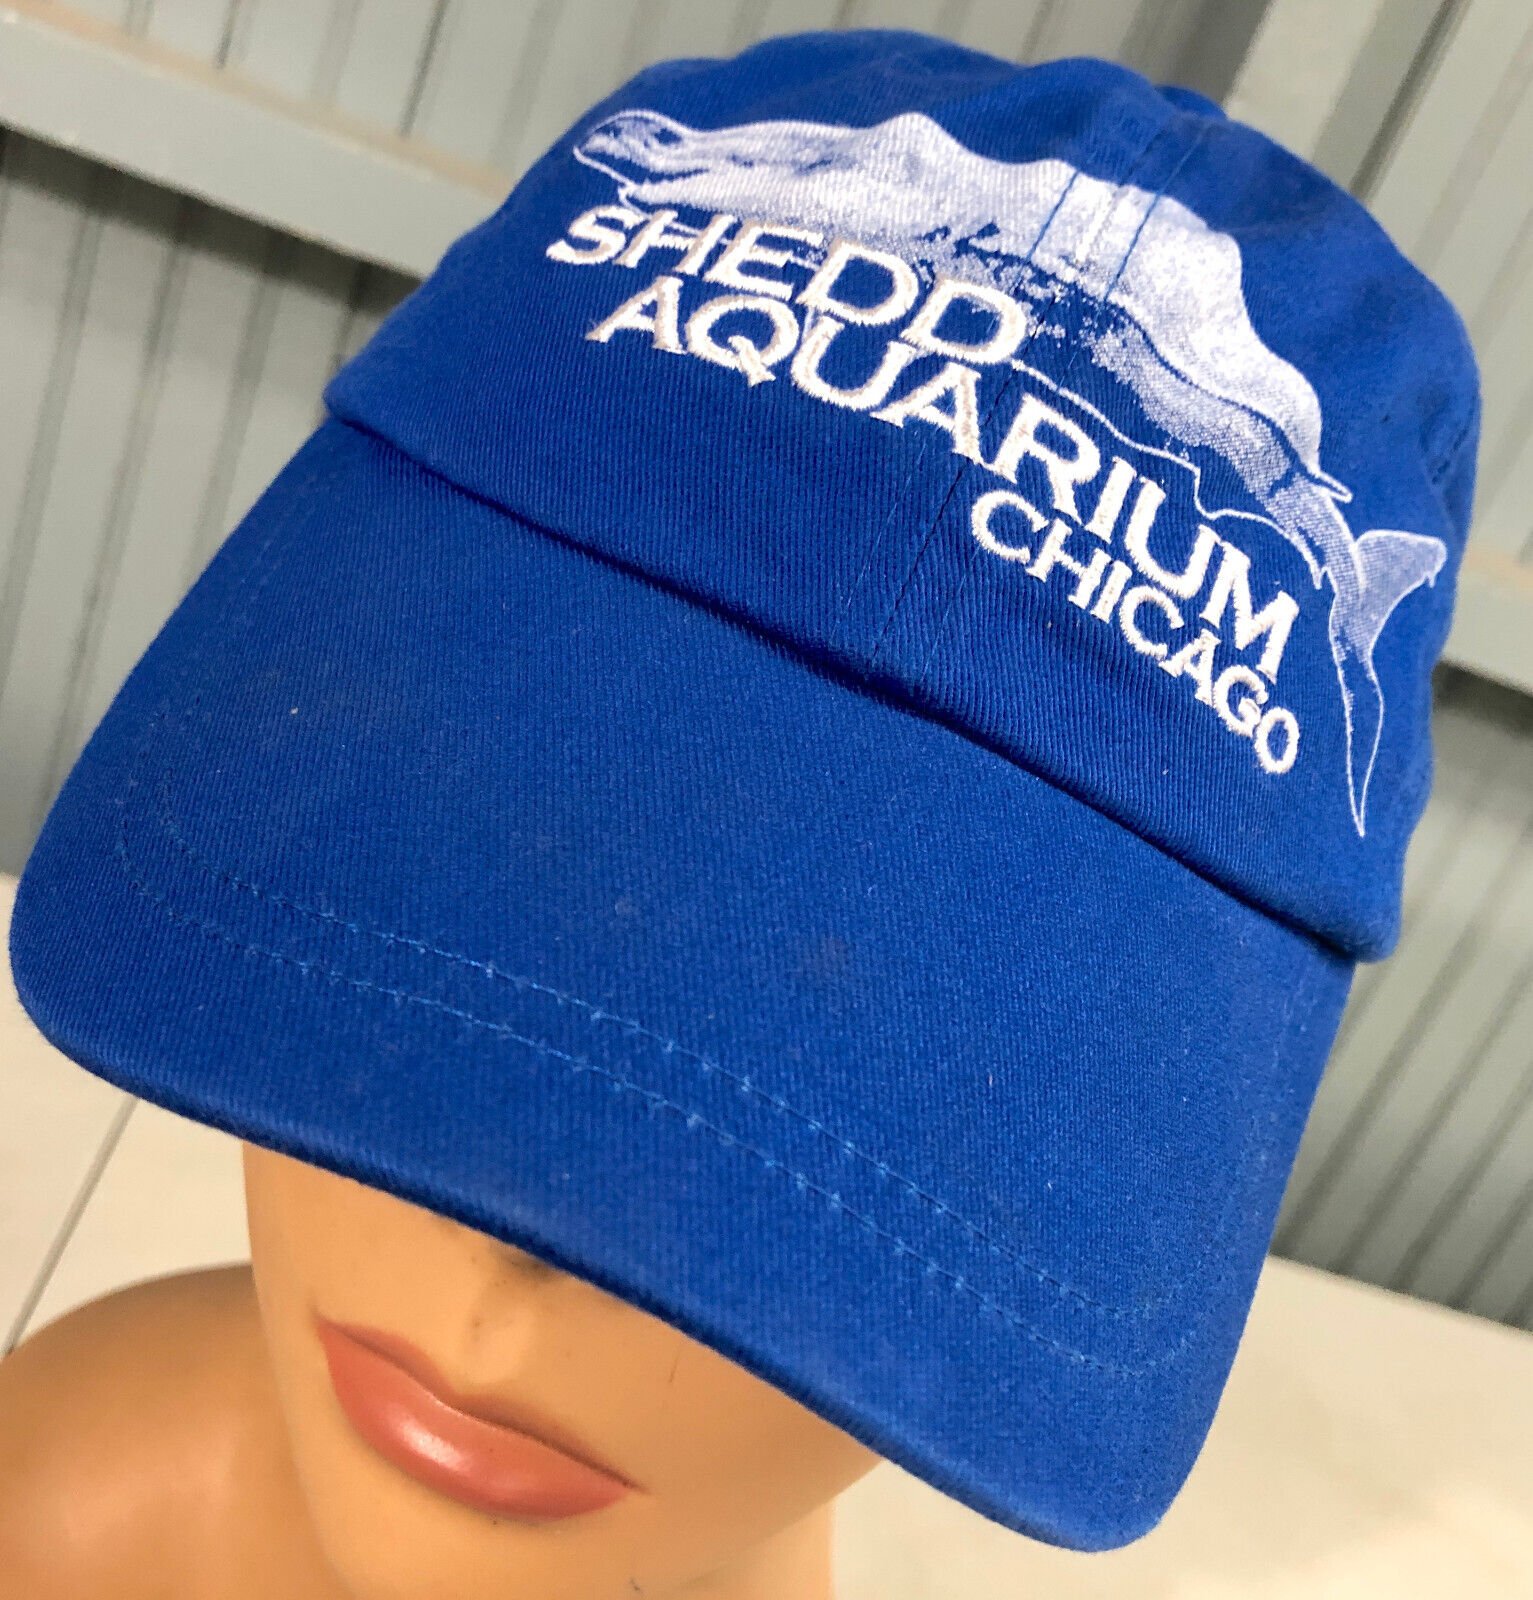 Shedd Aquarium Chicago Blue YOUTH Adjustable Baseball Cap Hat